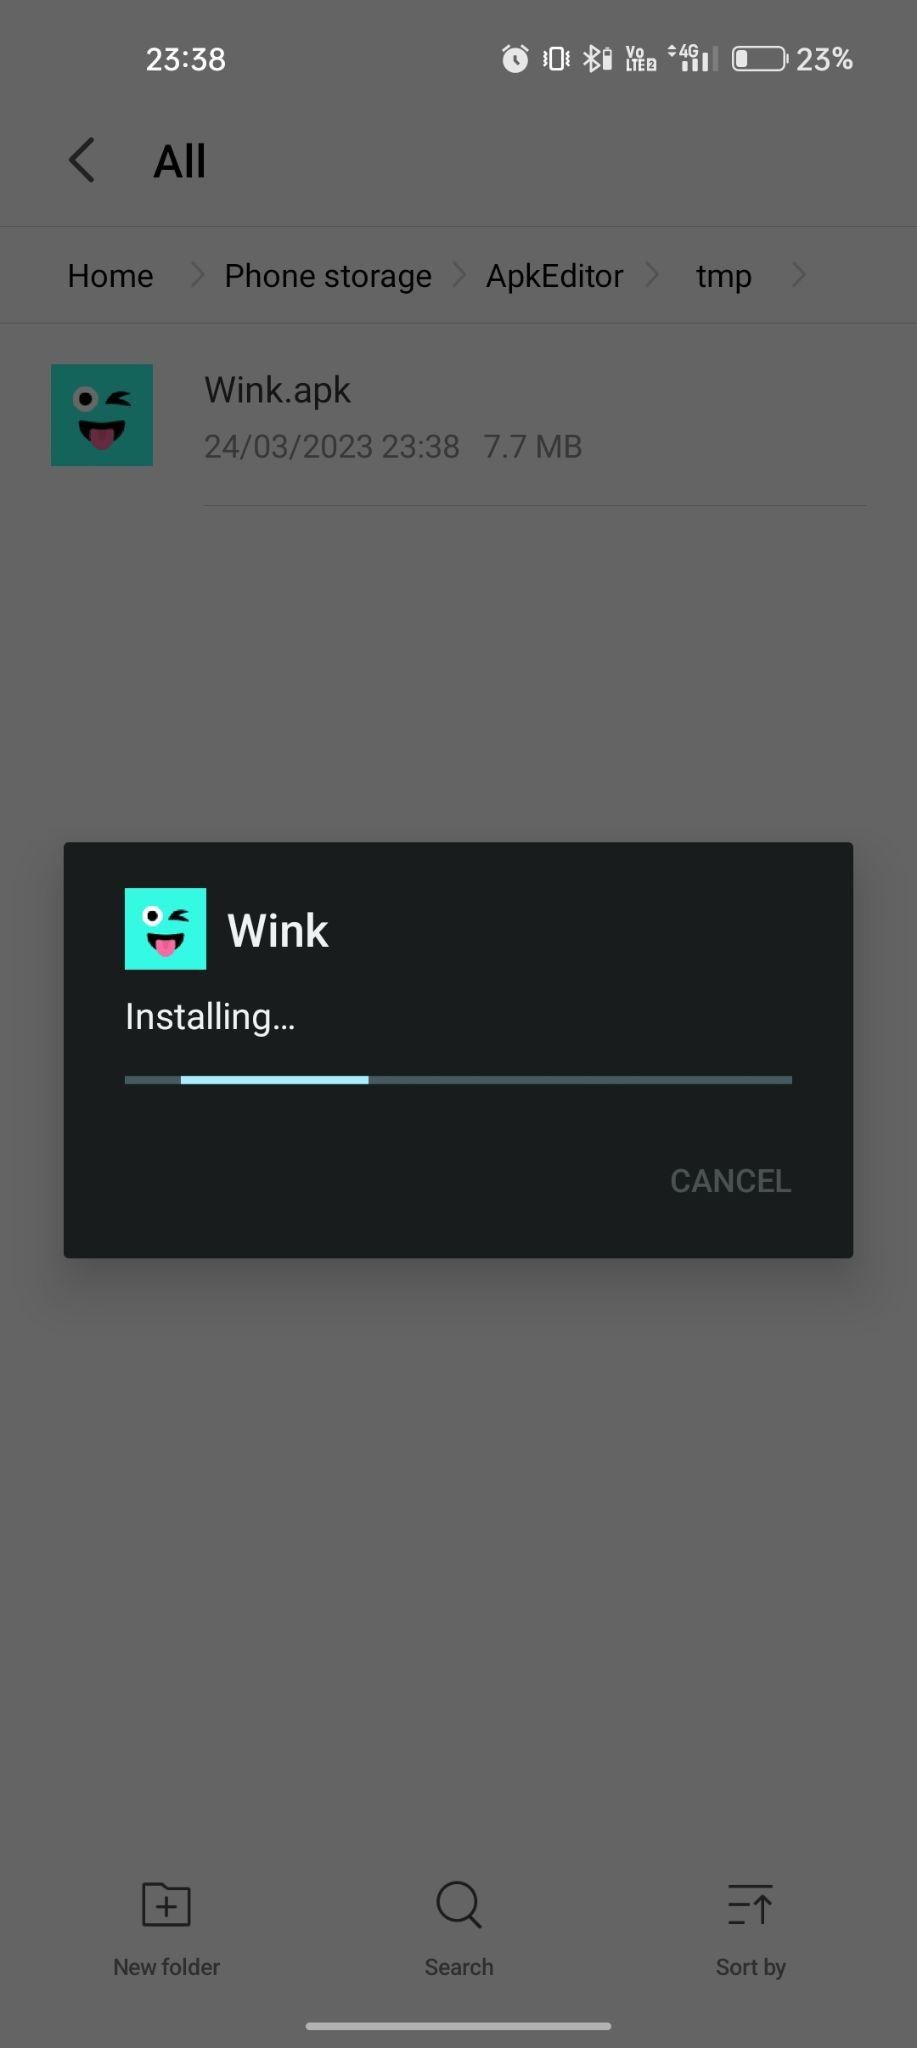 Wink apk installing